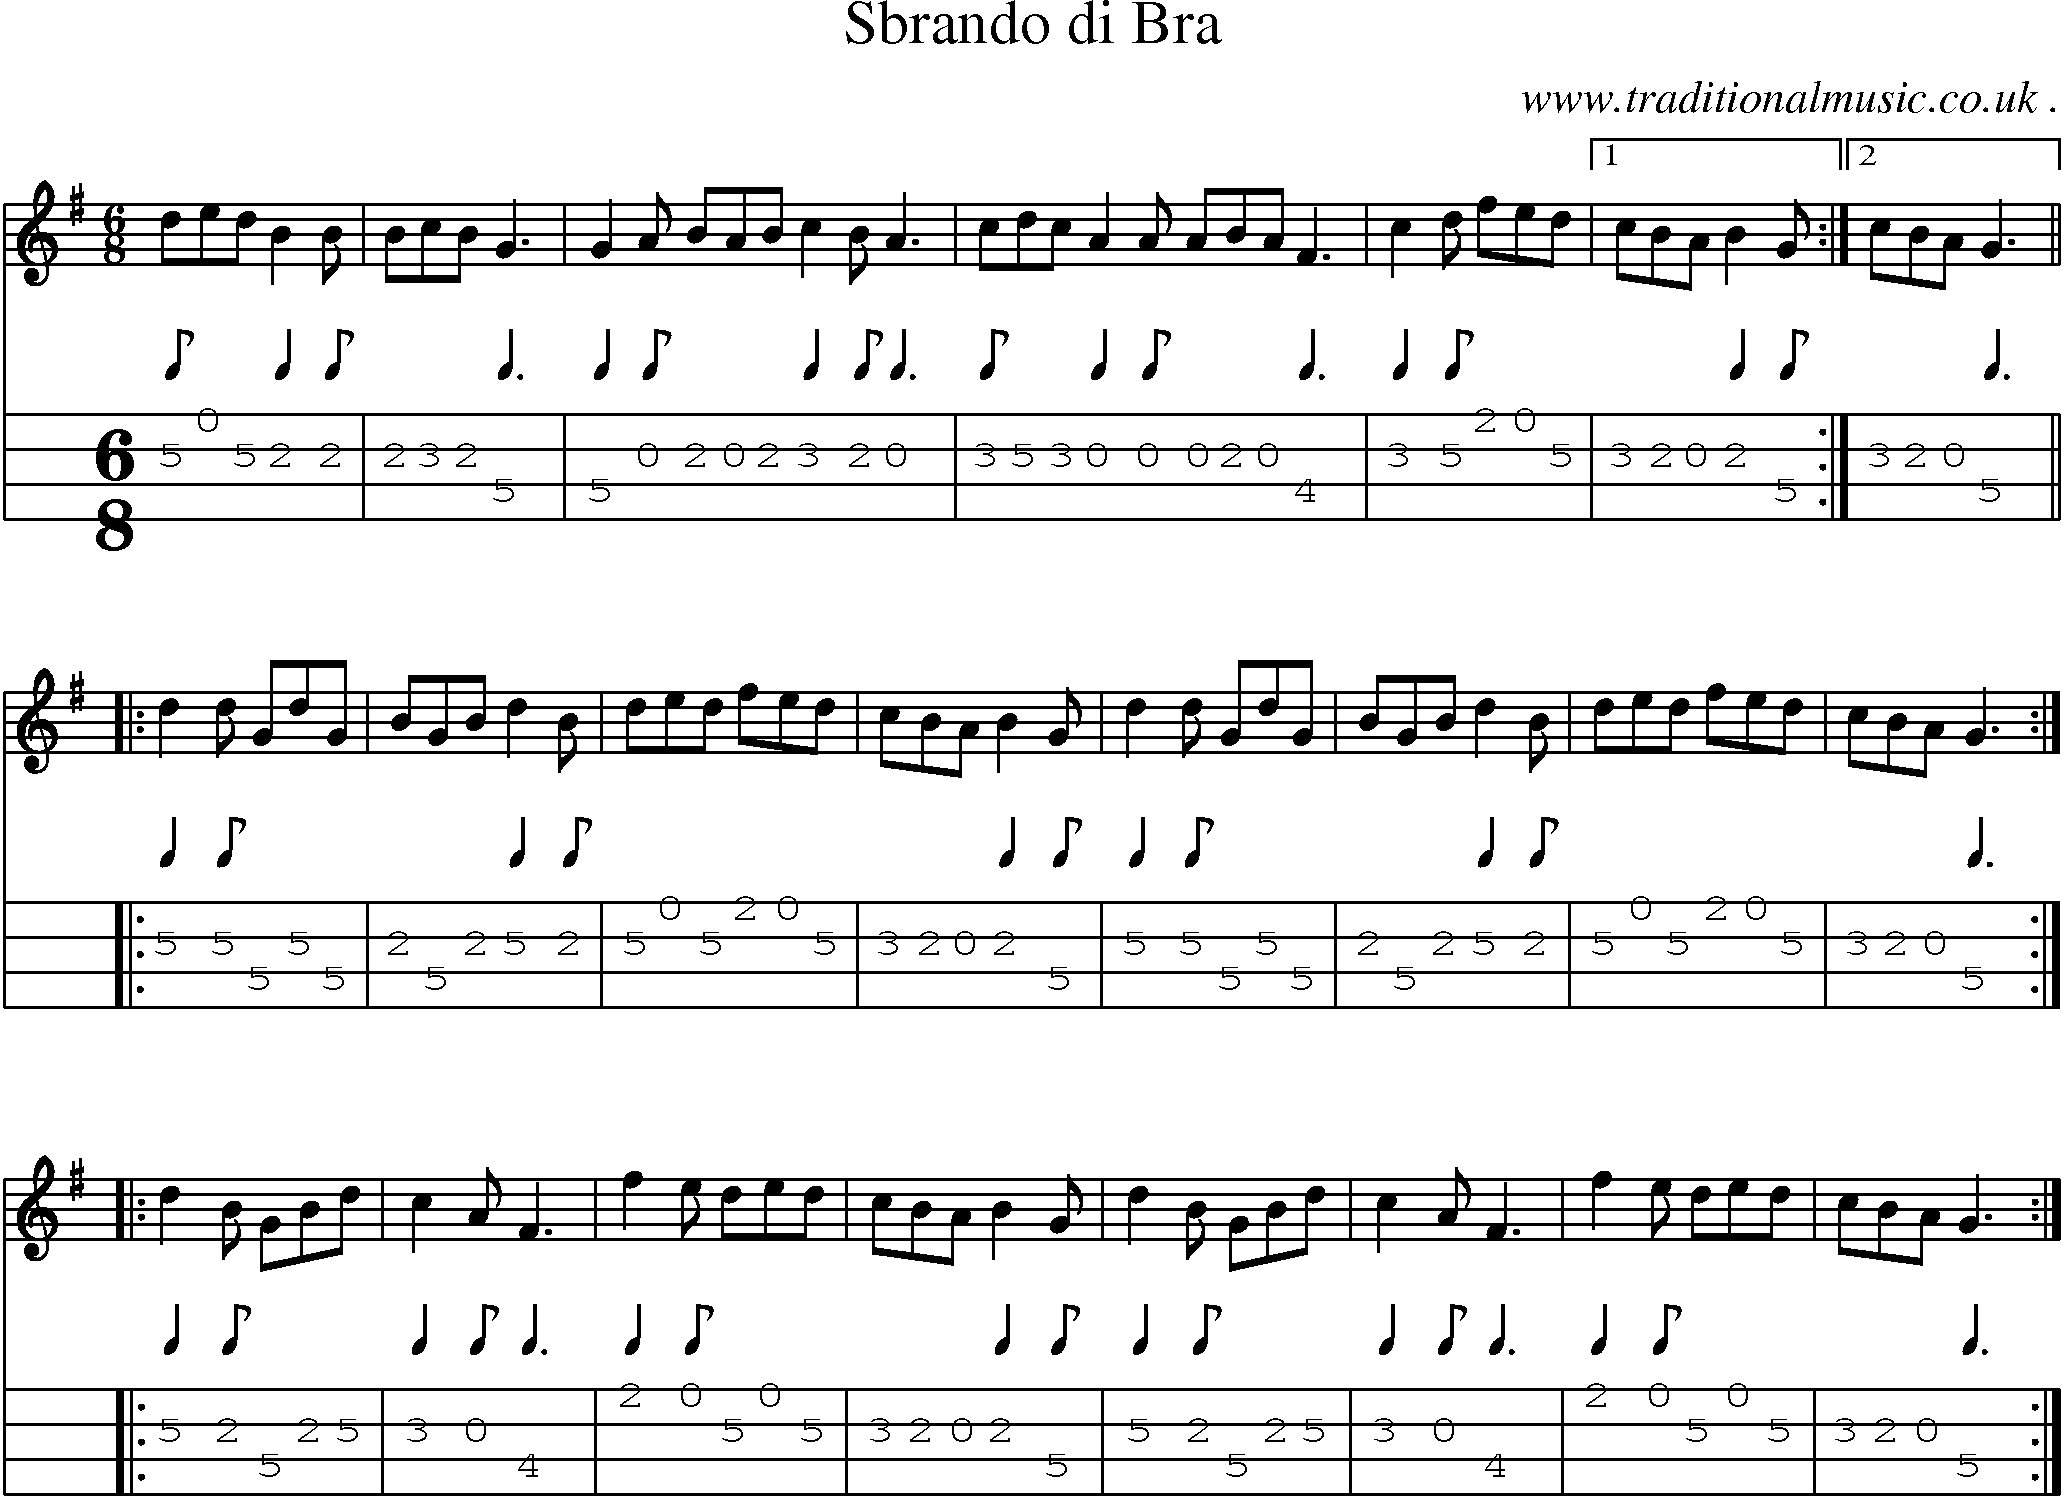 Sheet-Music and Mandolin Tabs for Sbrando Di Bra